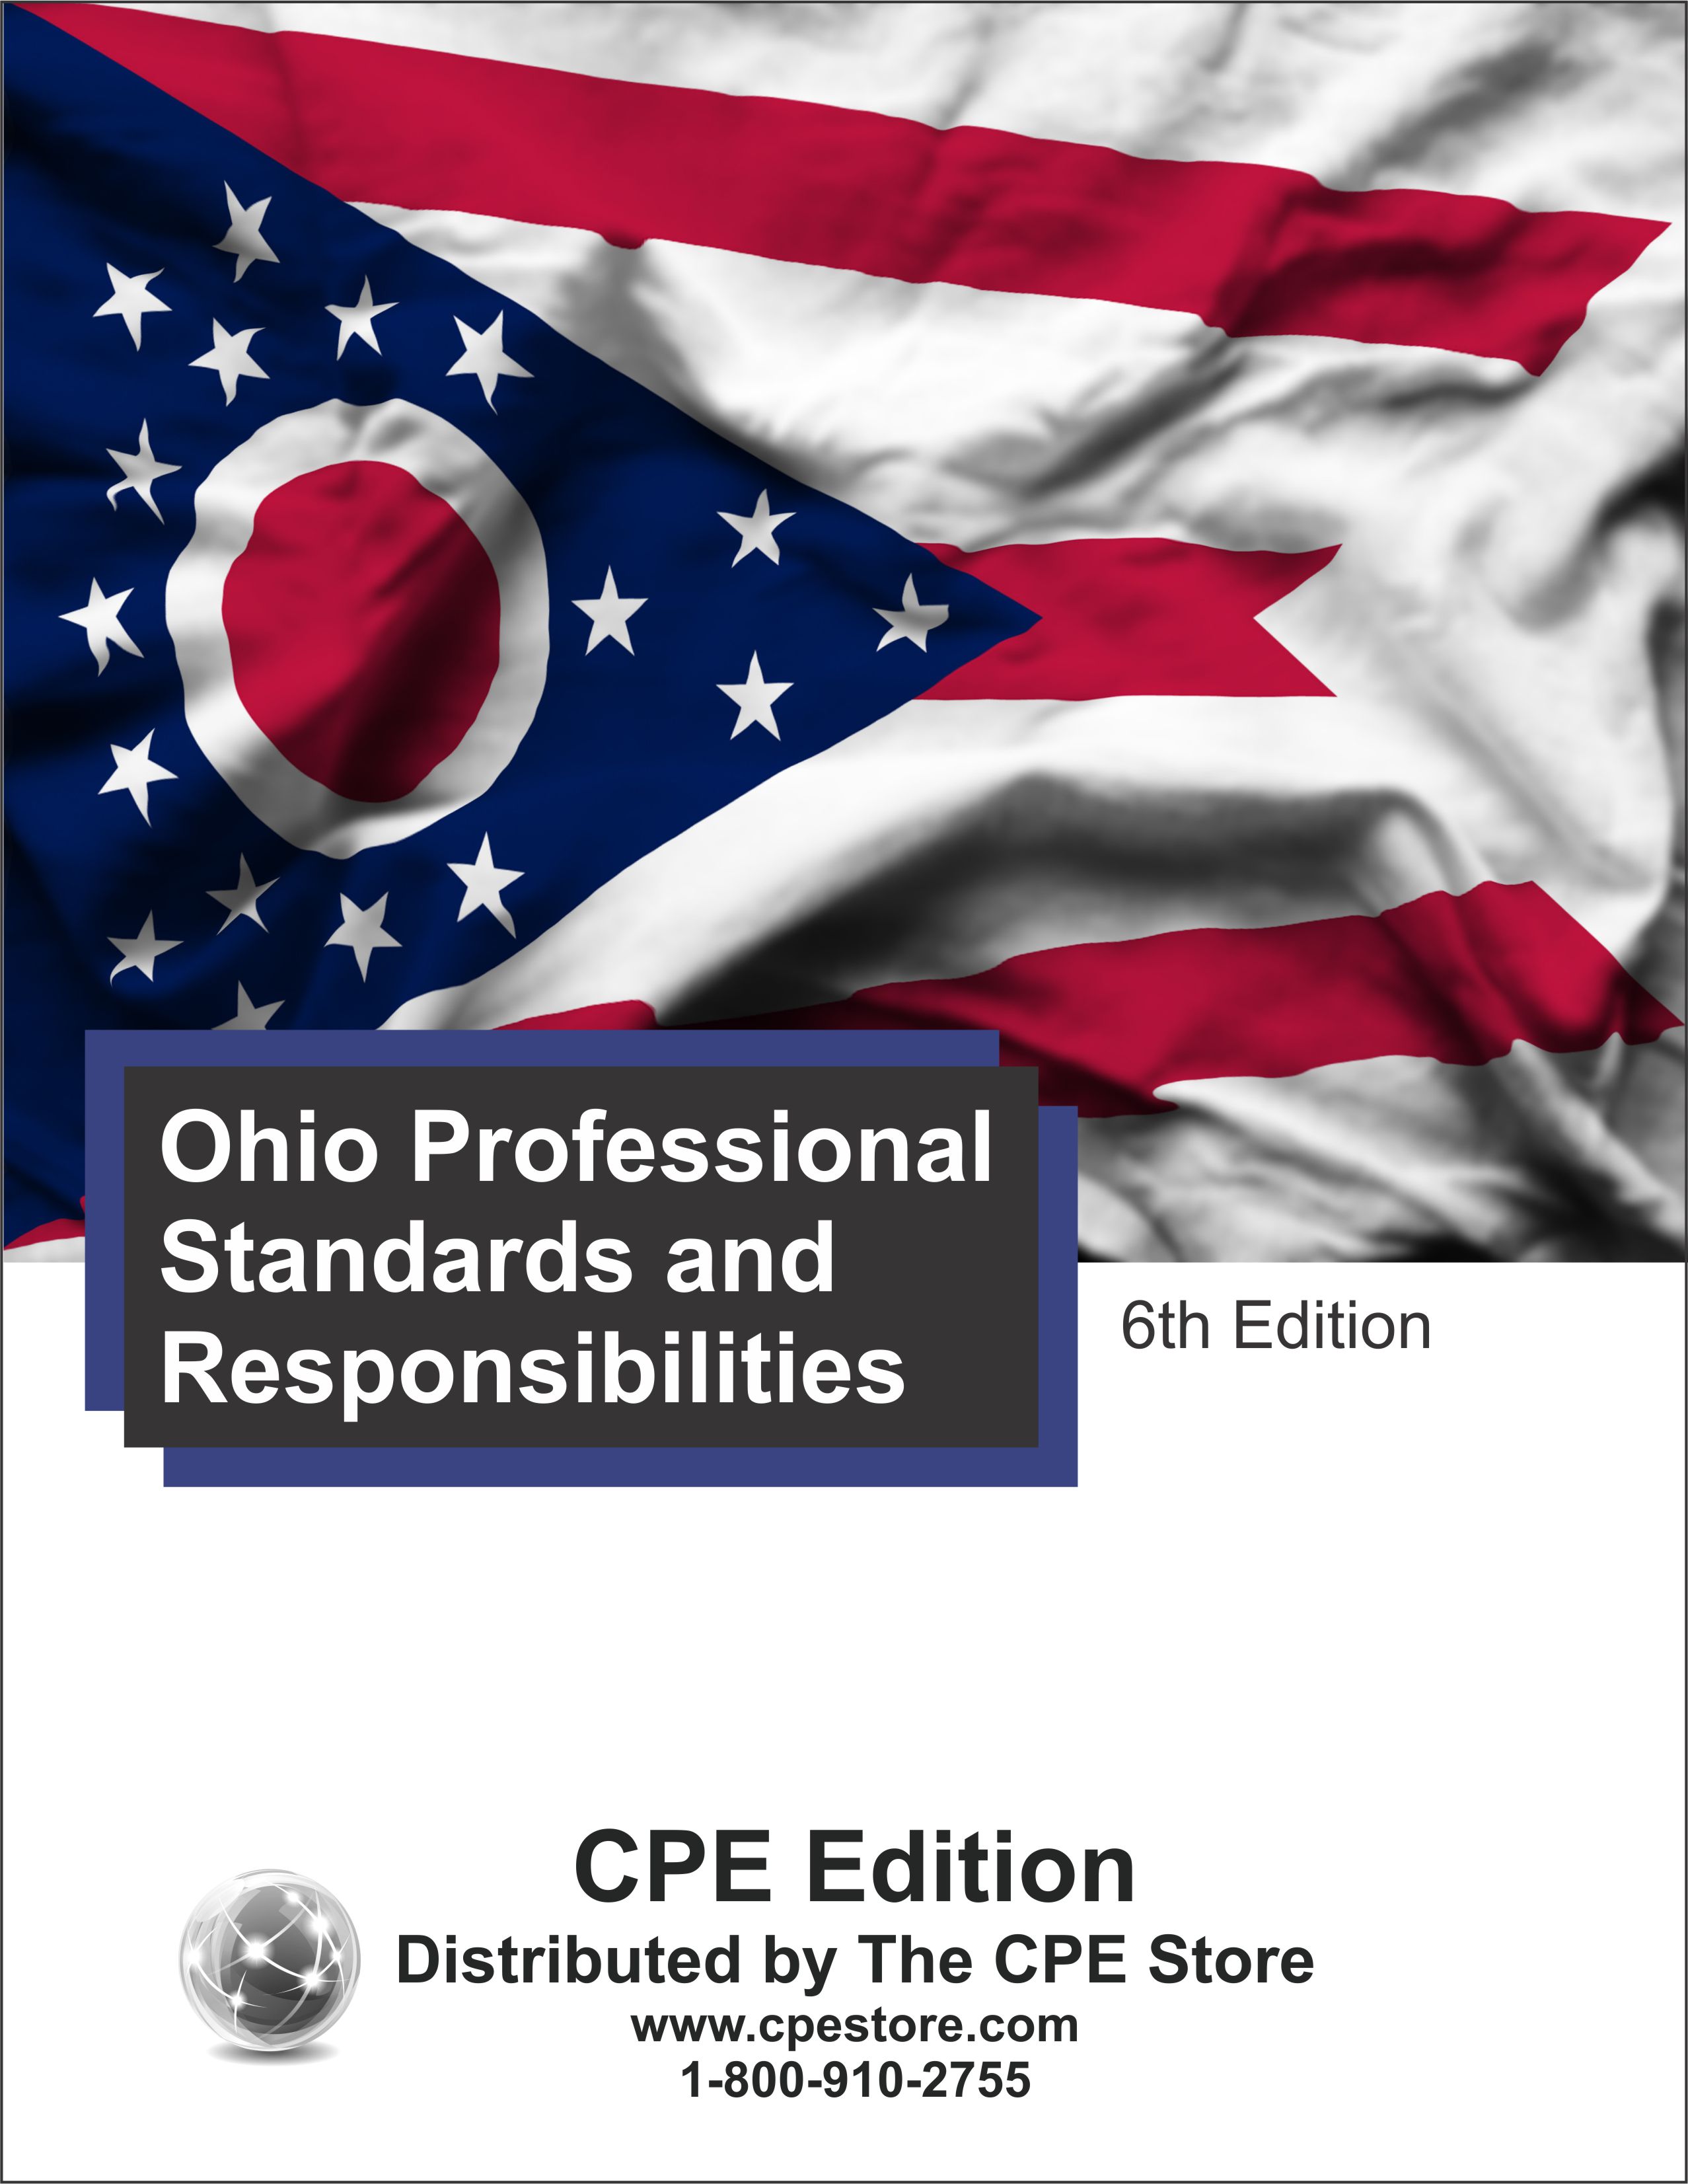 Ohio Professional Standards and Responsibilities